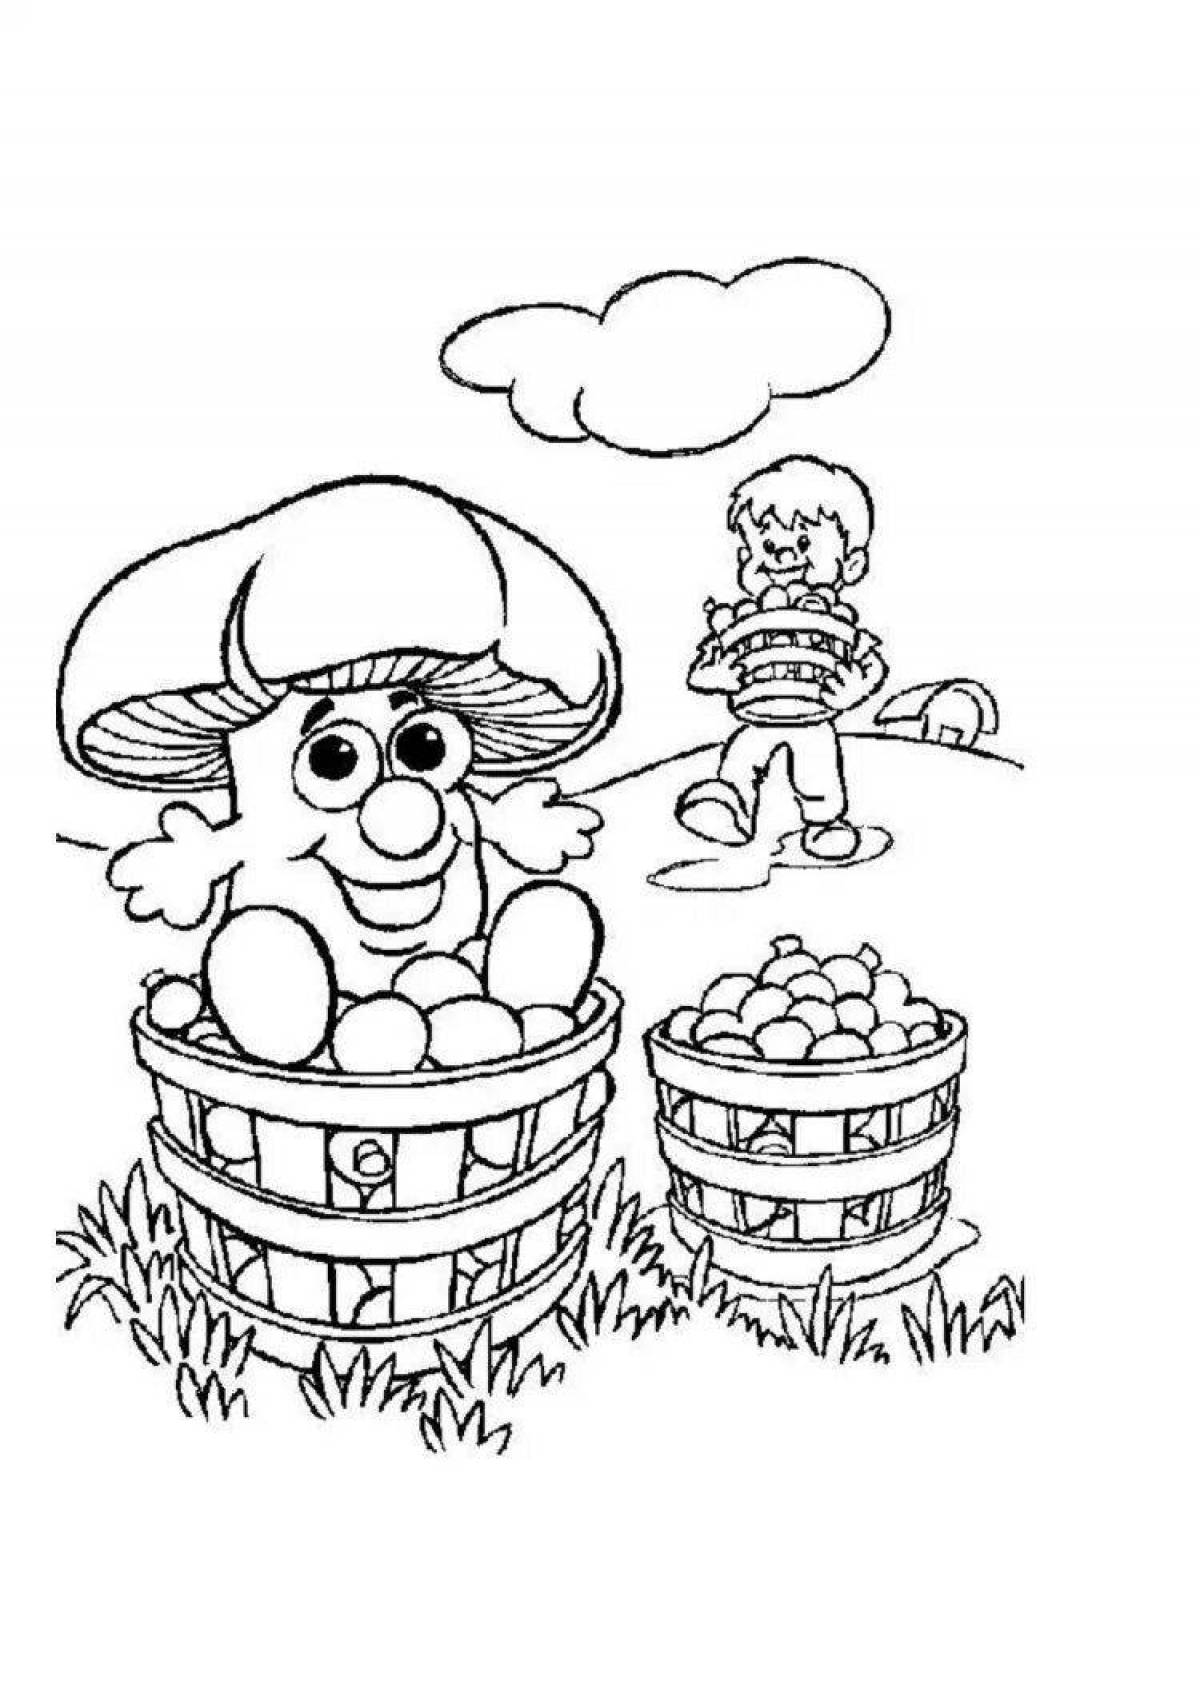 Coloring basket with sweet mushrooms